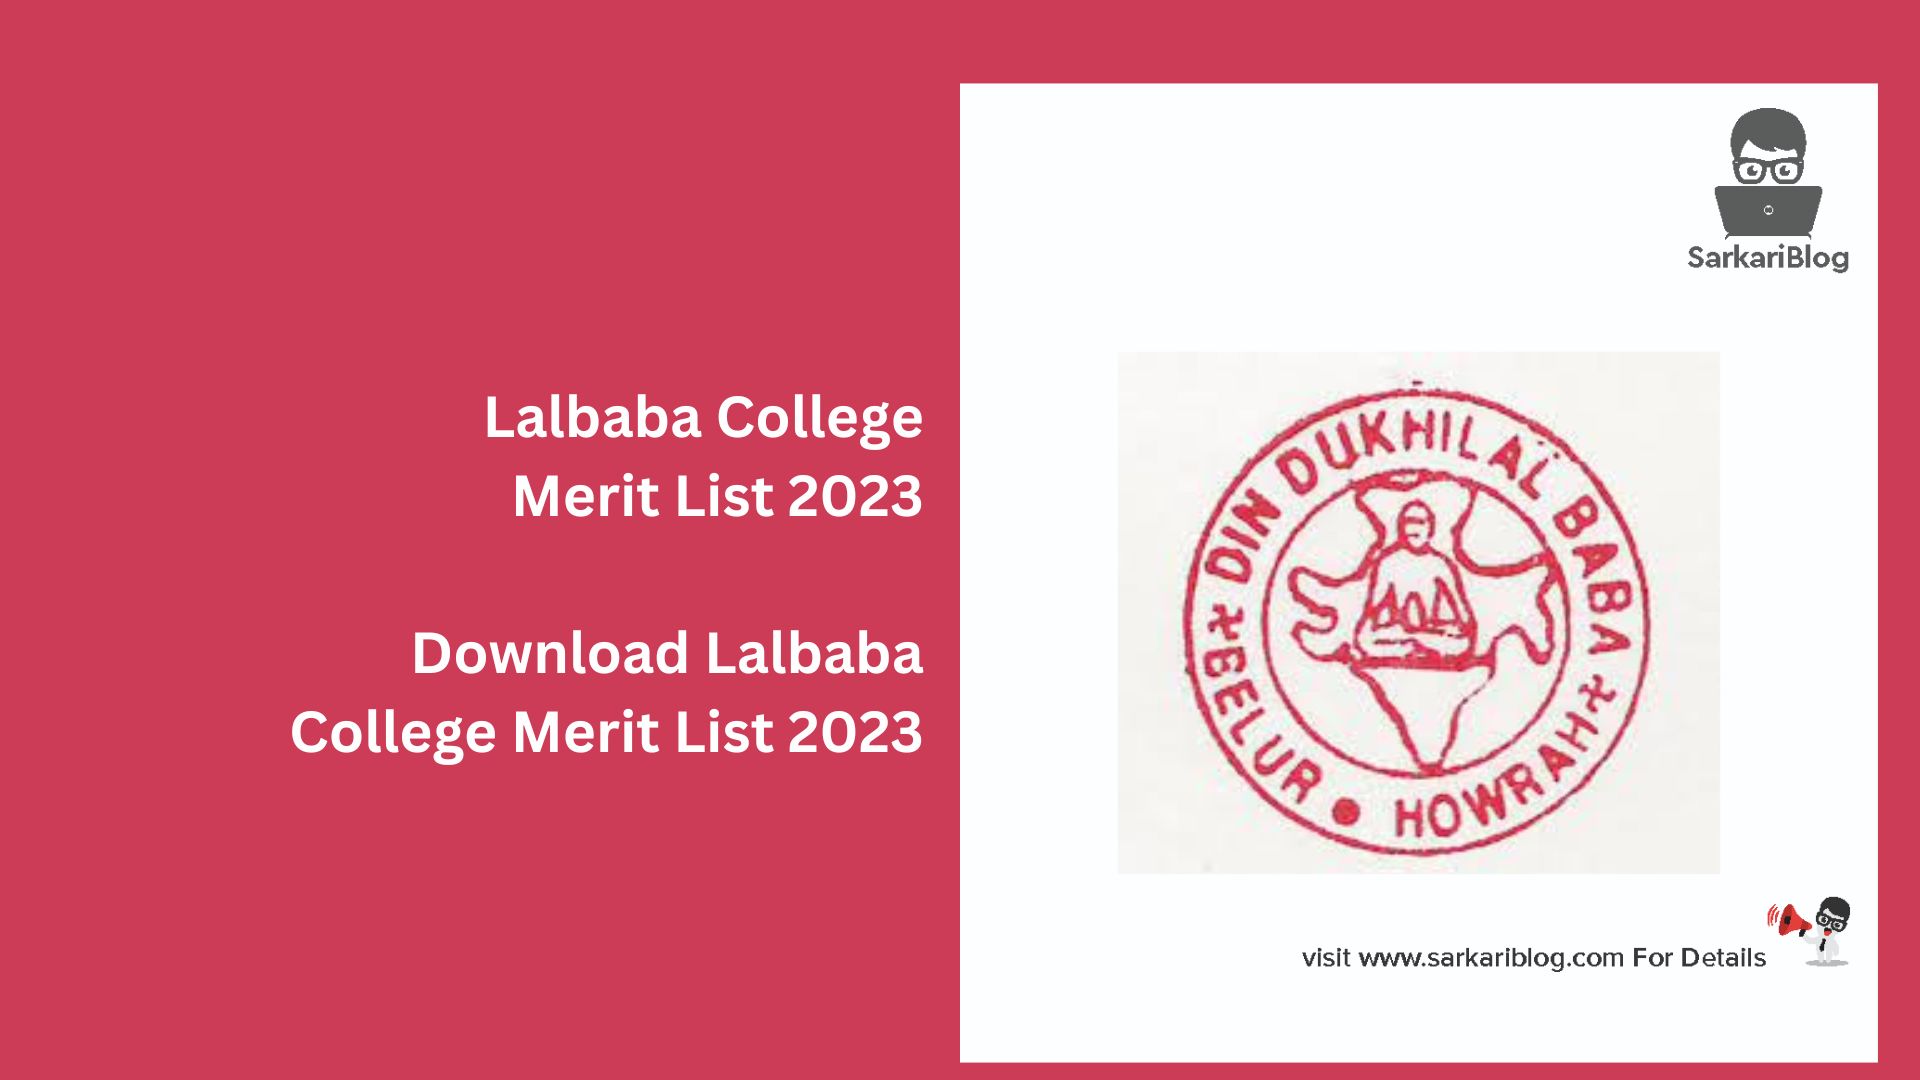 Lalbaba College Merit List 2023